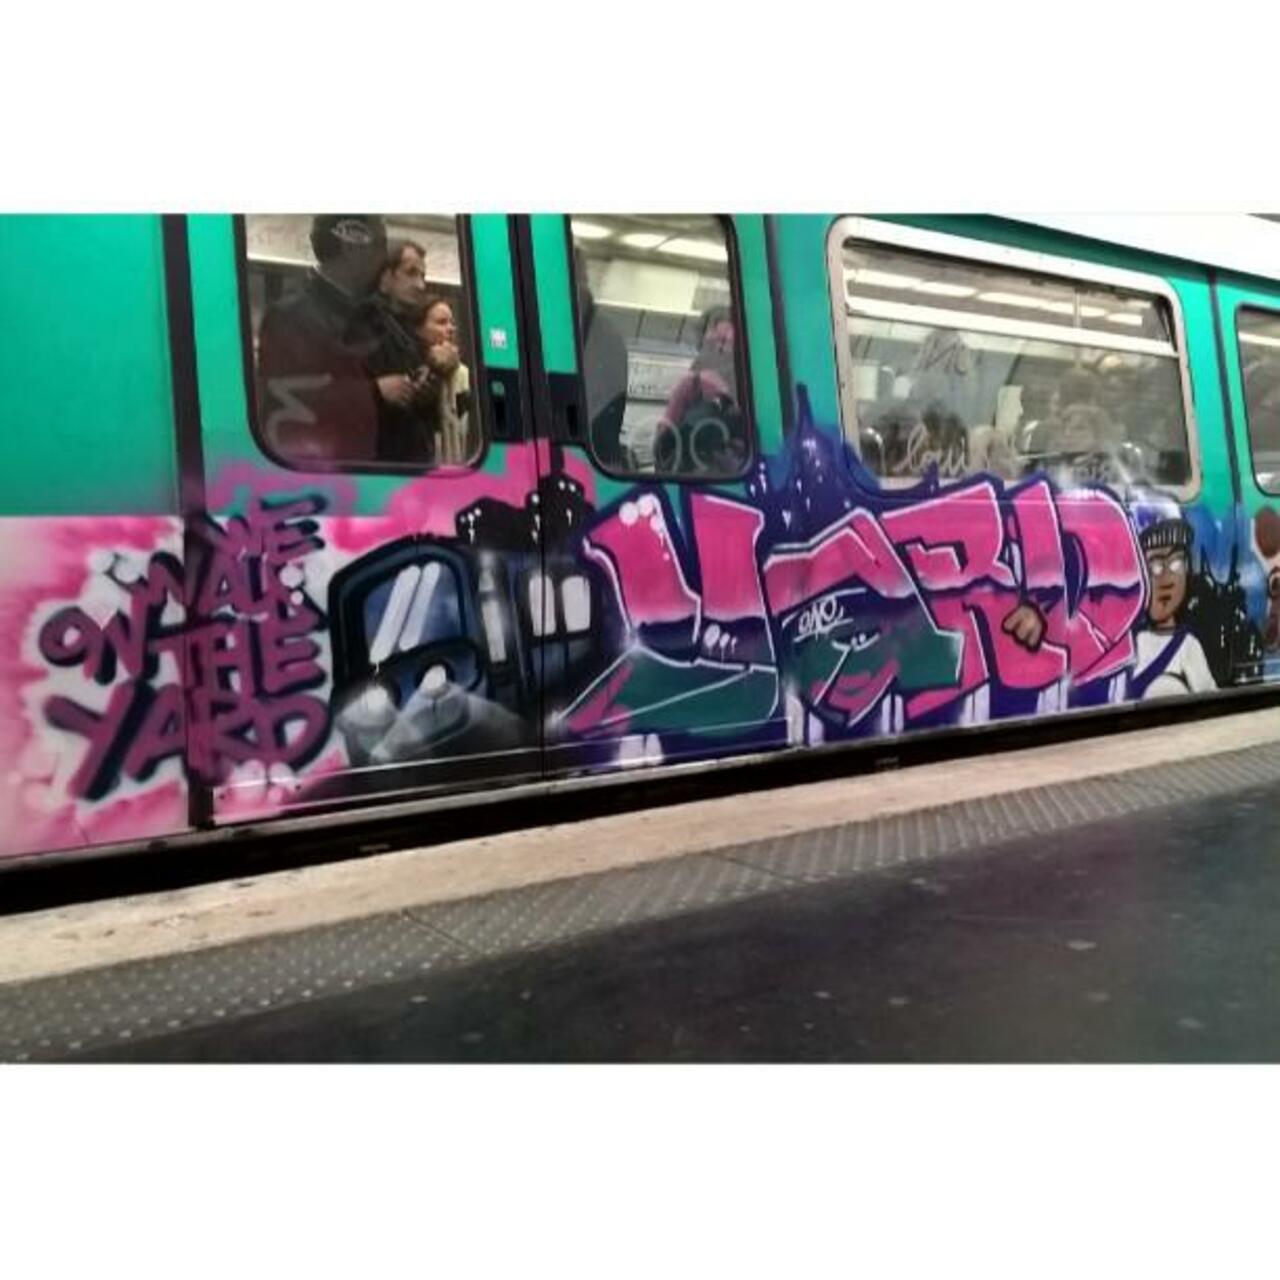 circumjacent_fr: #Paris #graffiti photo by maxdimontemarciano http://ift.tt/1NC5w6O #StreetArt http://t.co/1lTwBotbFc